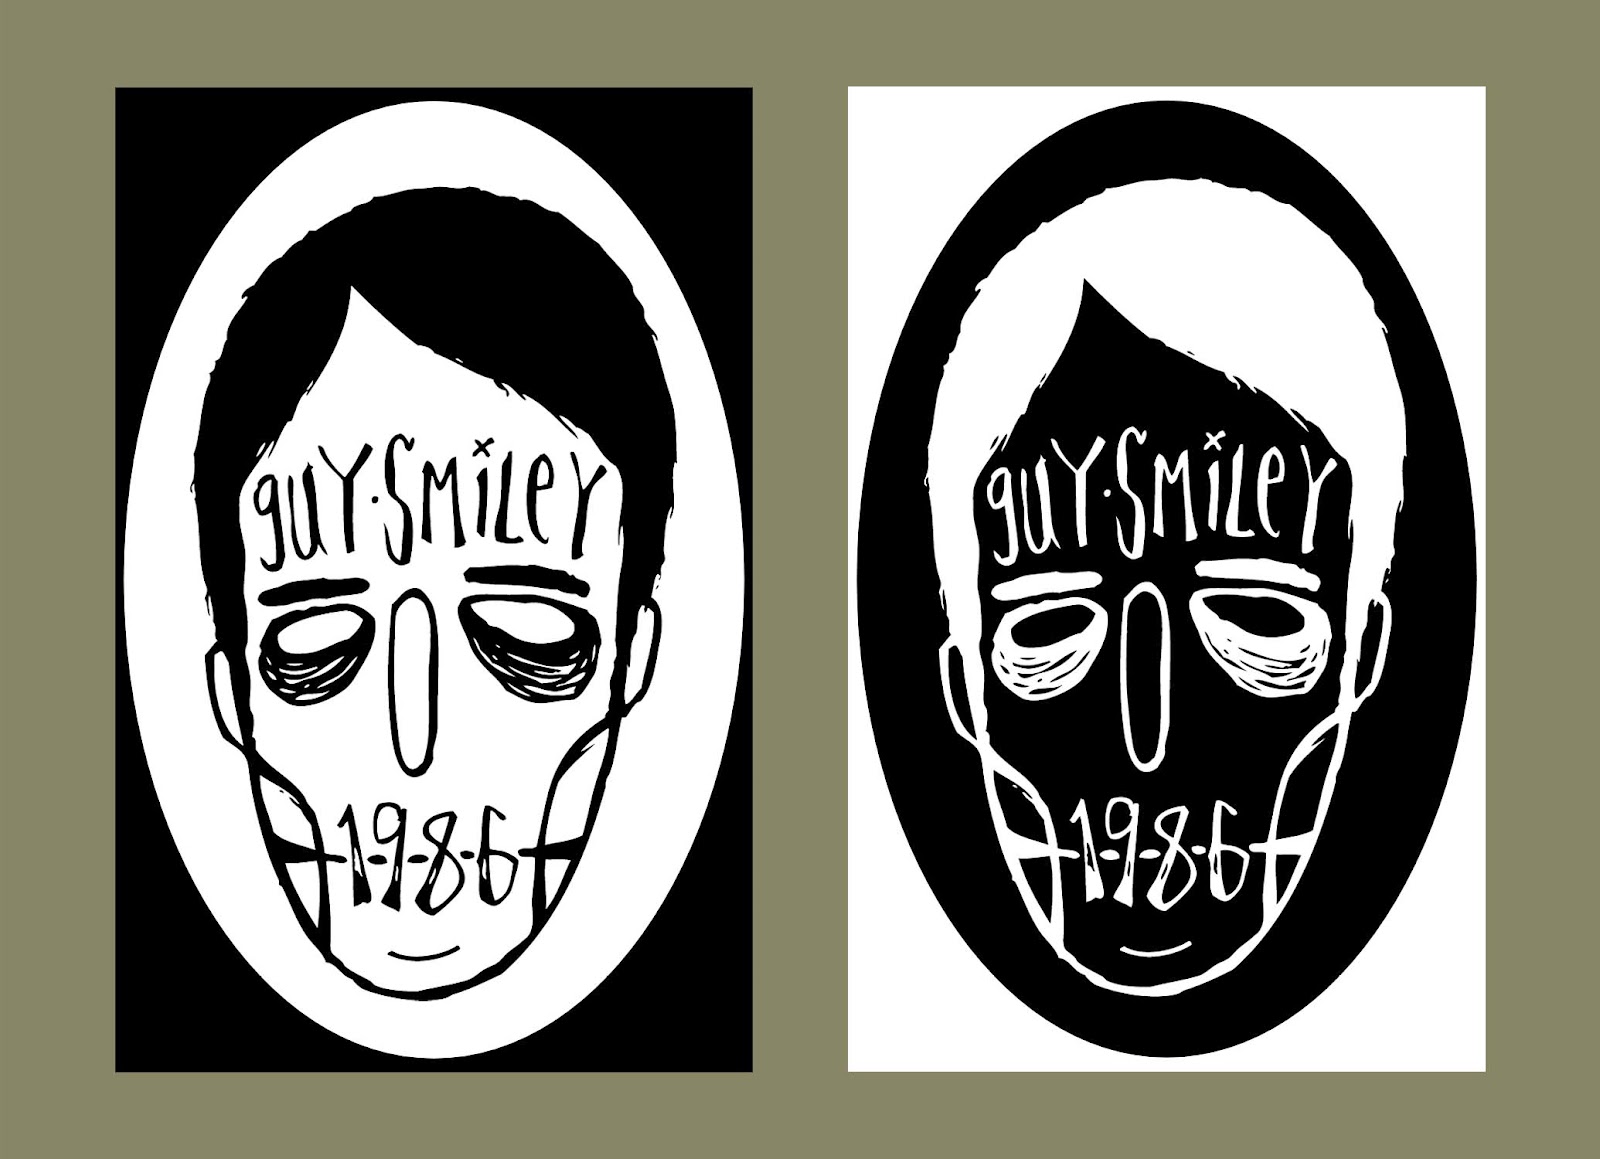 Bright Colors, Darker Themes: Guy Smiley sticker design